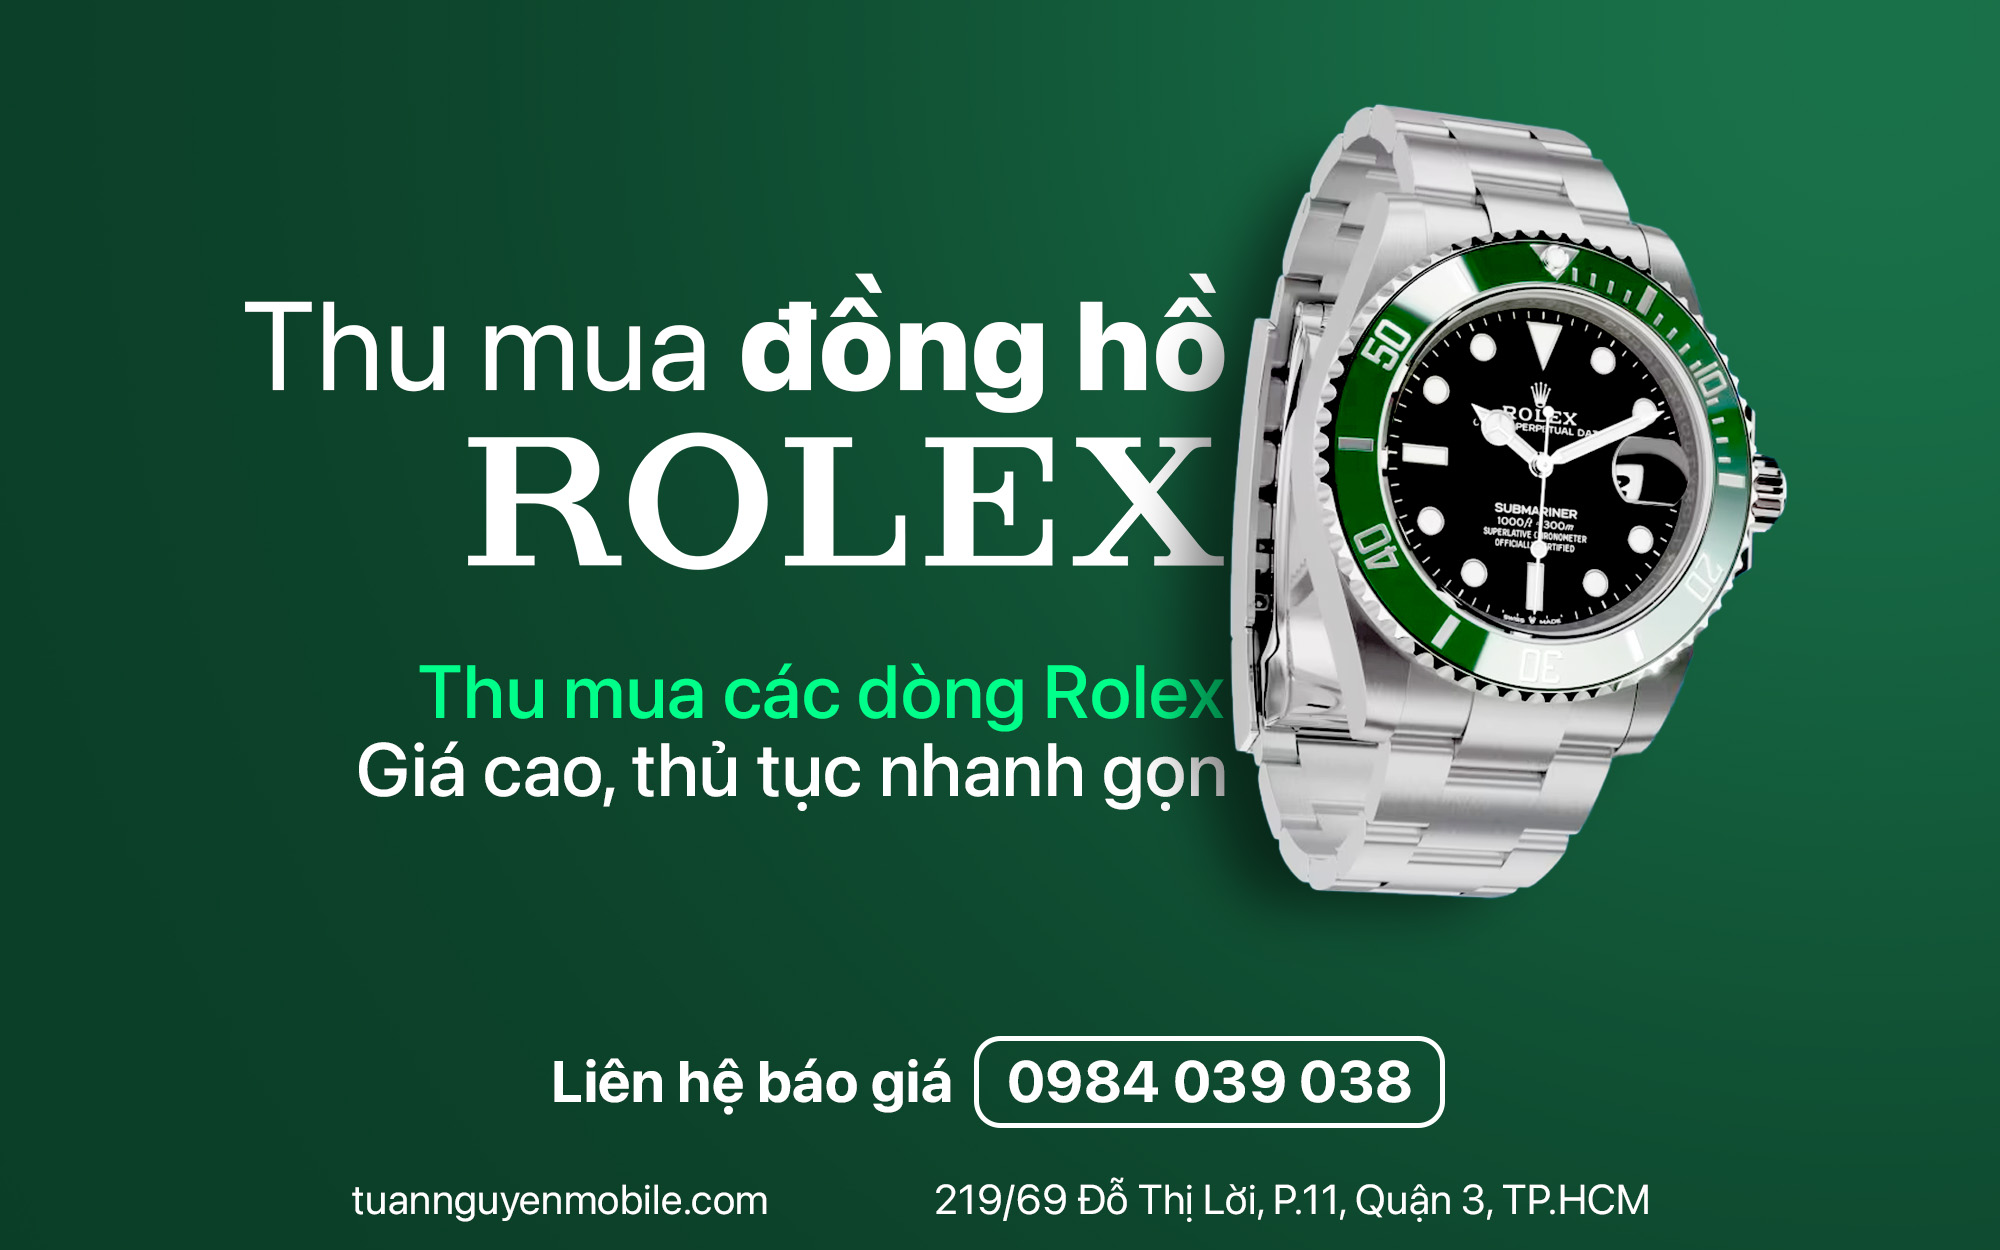 thu mua đồng hồ rolex tại tphcm